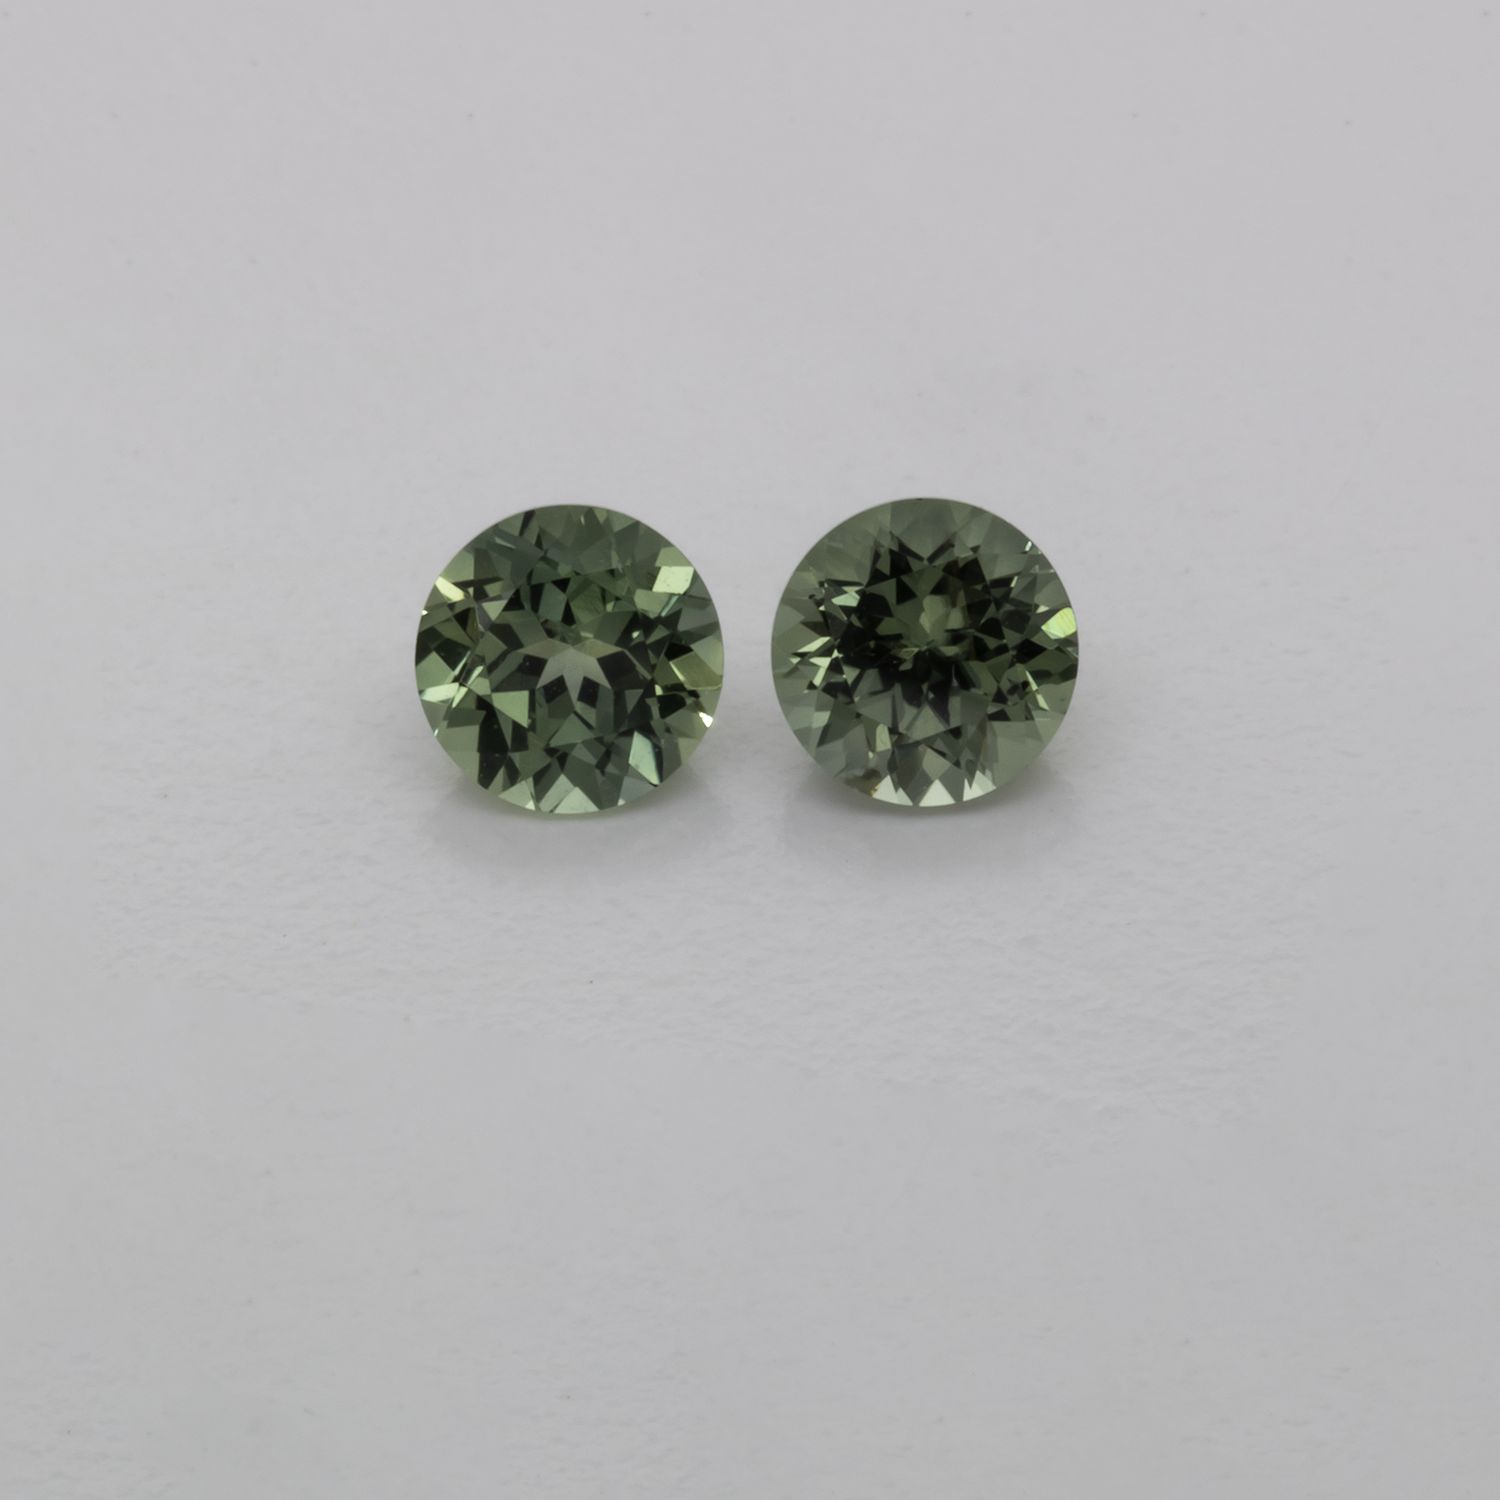 Saphir Paar - grün, rund, 4,1x4,1 mm, 0,72 cts, Nr. XSR11100